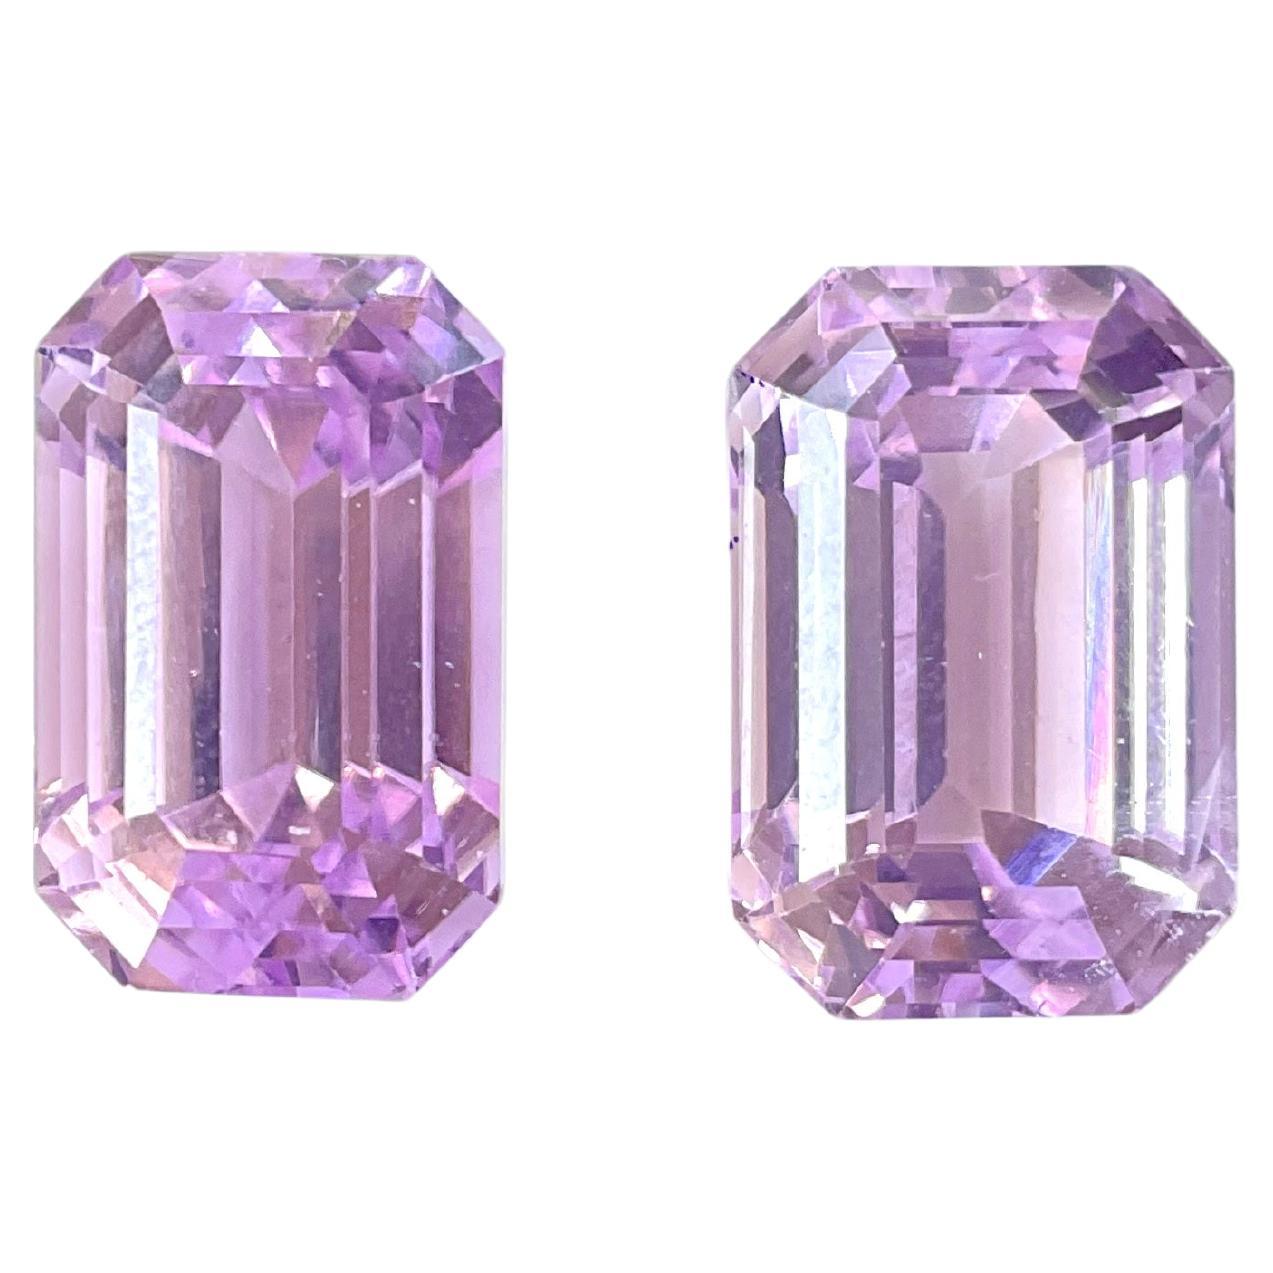 35.58 Carats Pink Kunzite Octagon Pair Natural Cut Stone For Fine Gem Jewellery